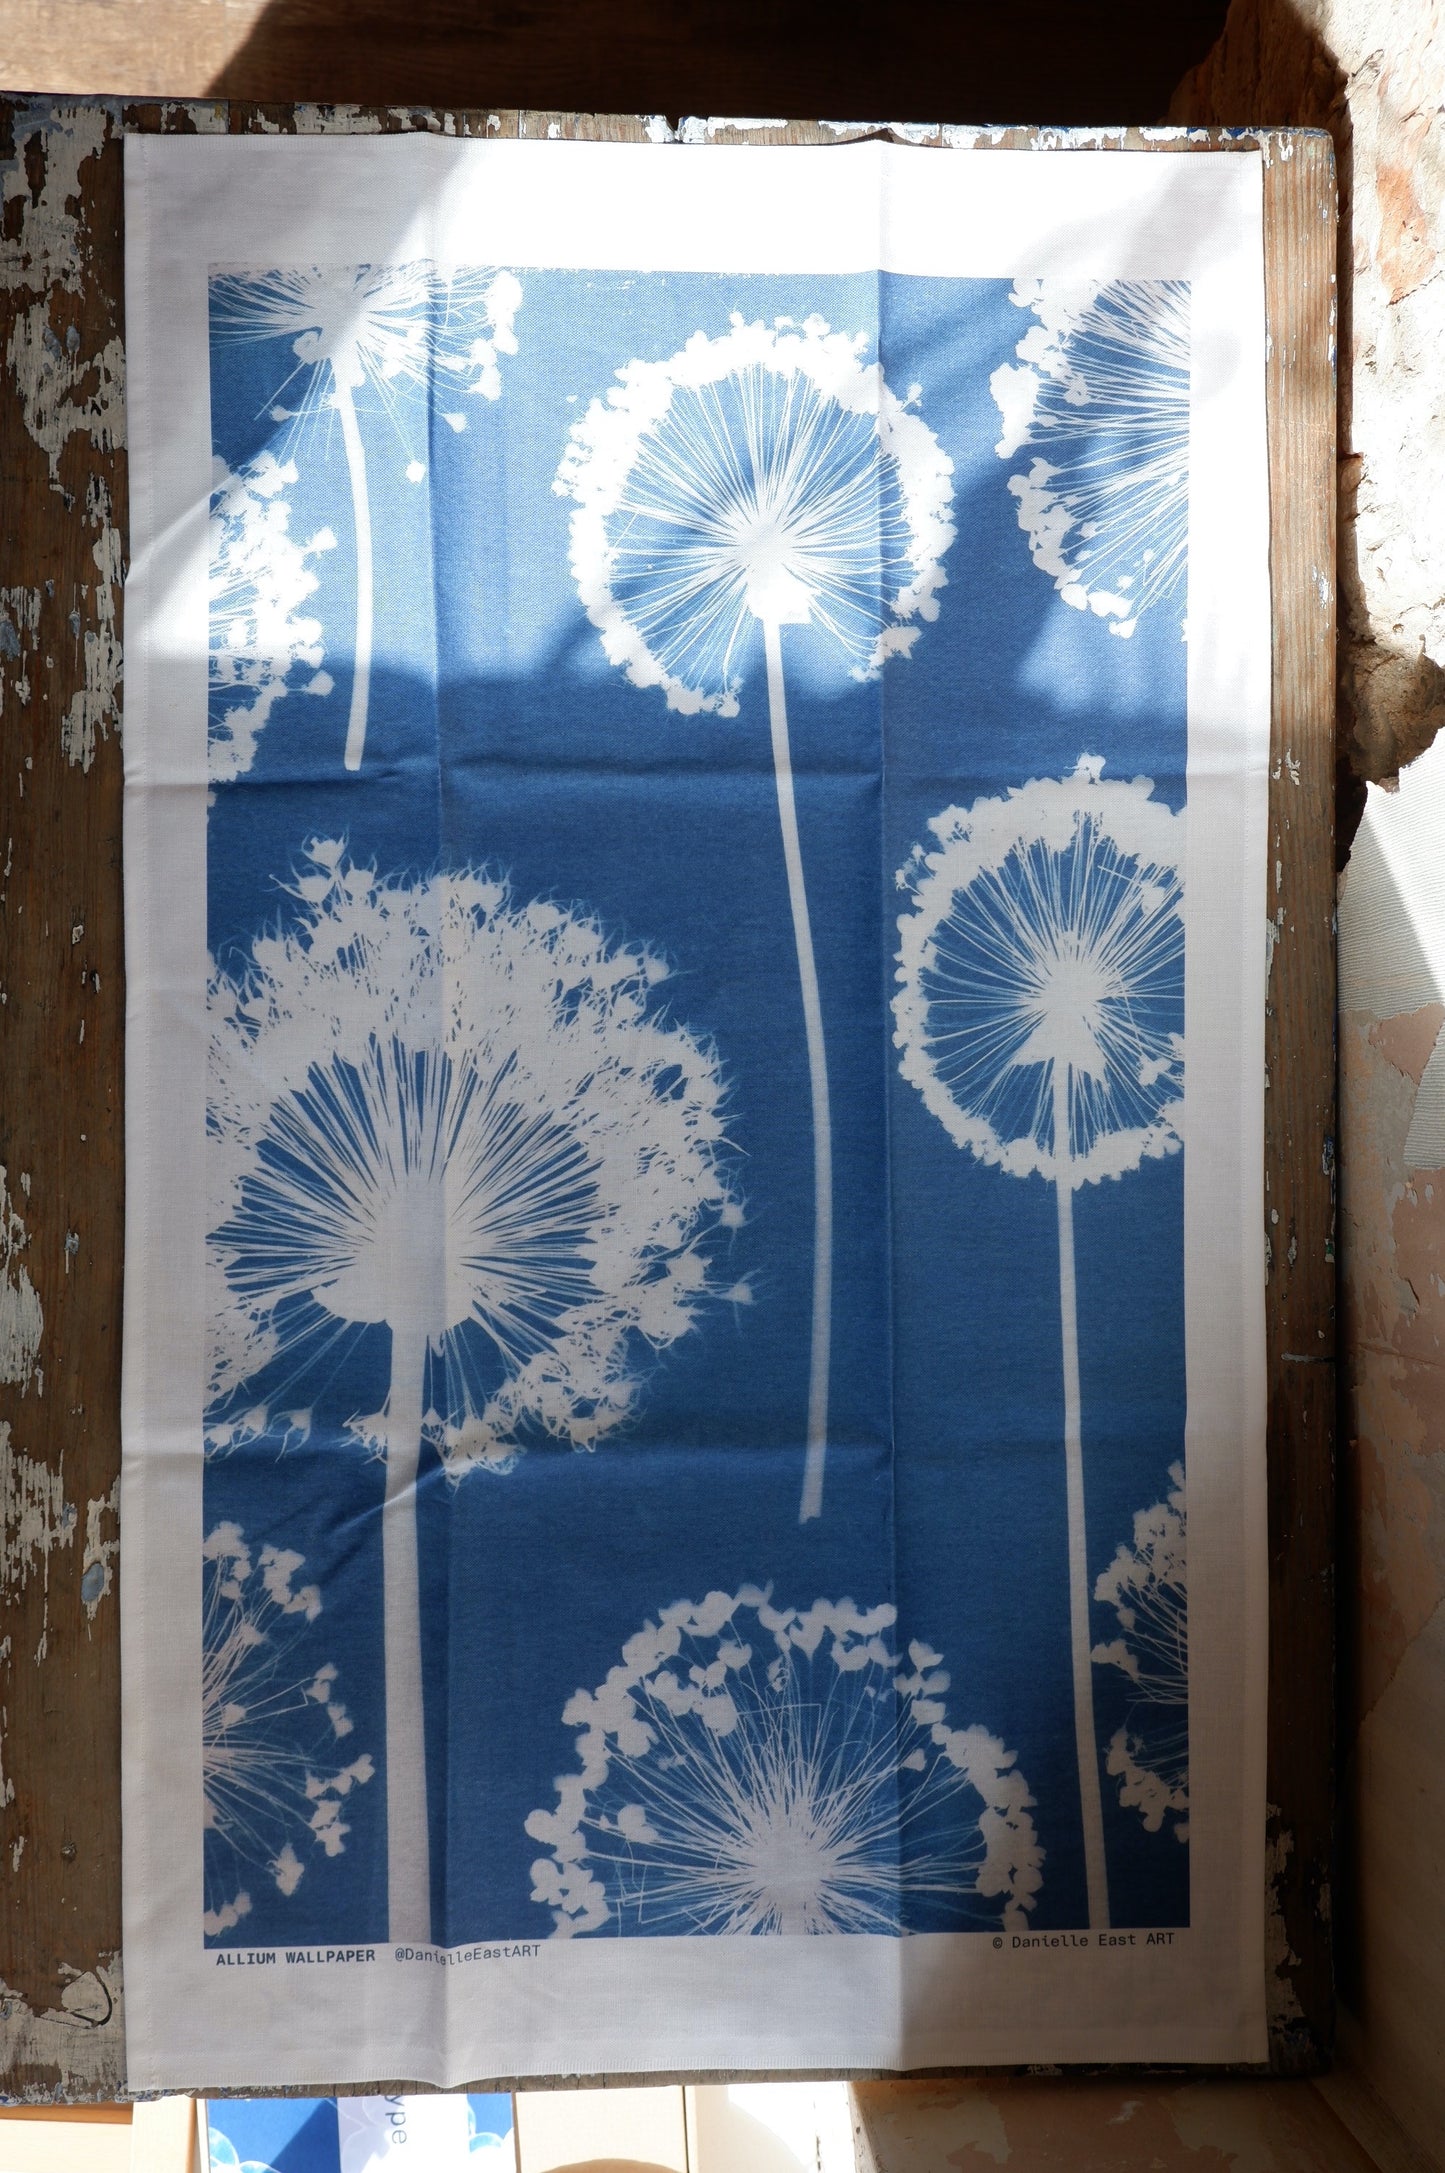 Allium Cyanotype design Tea Towel